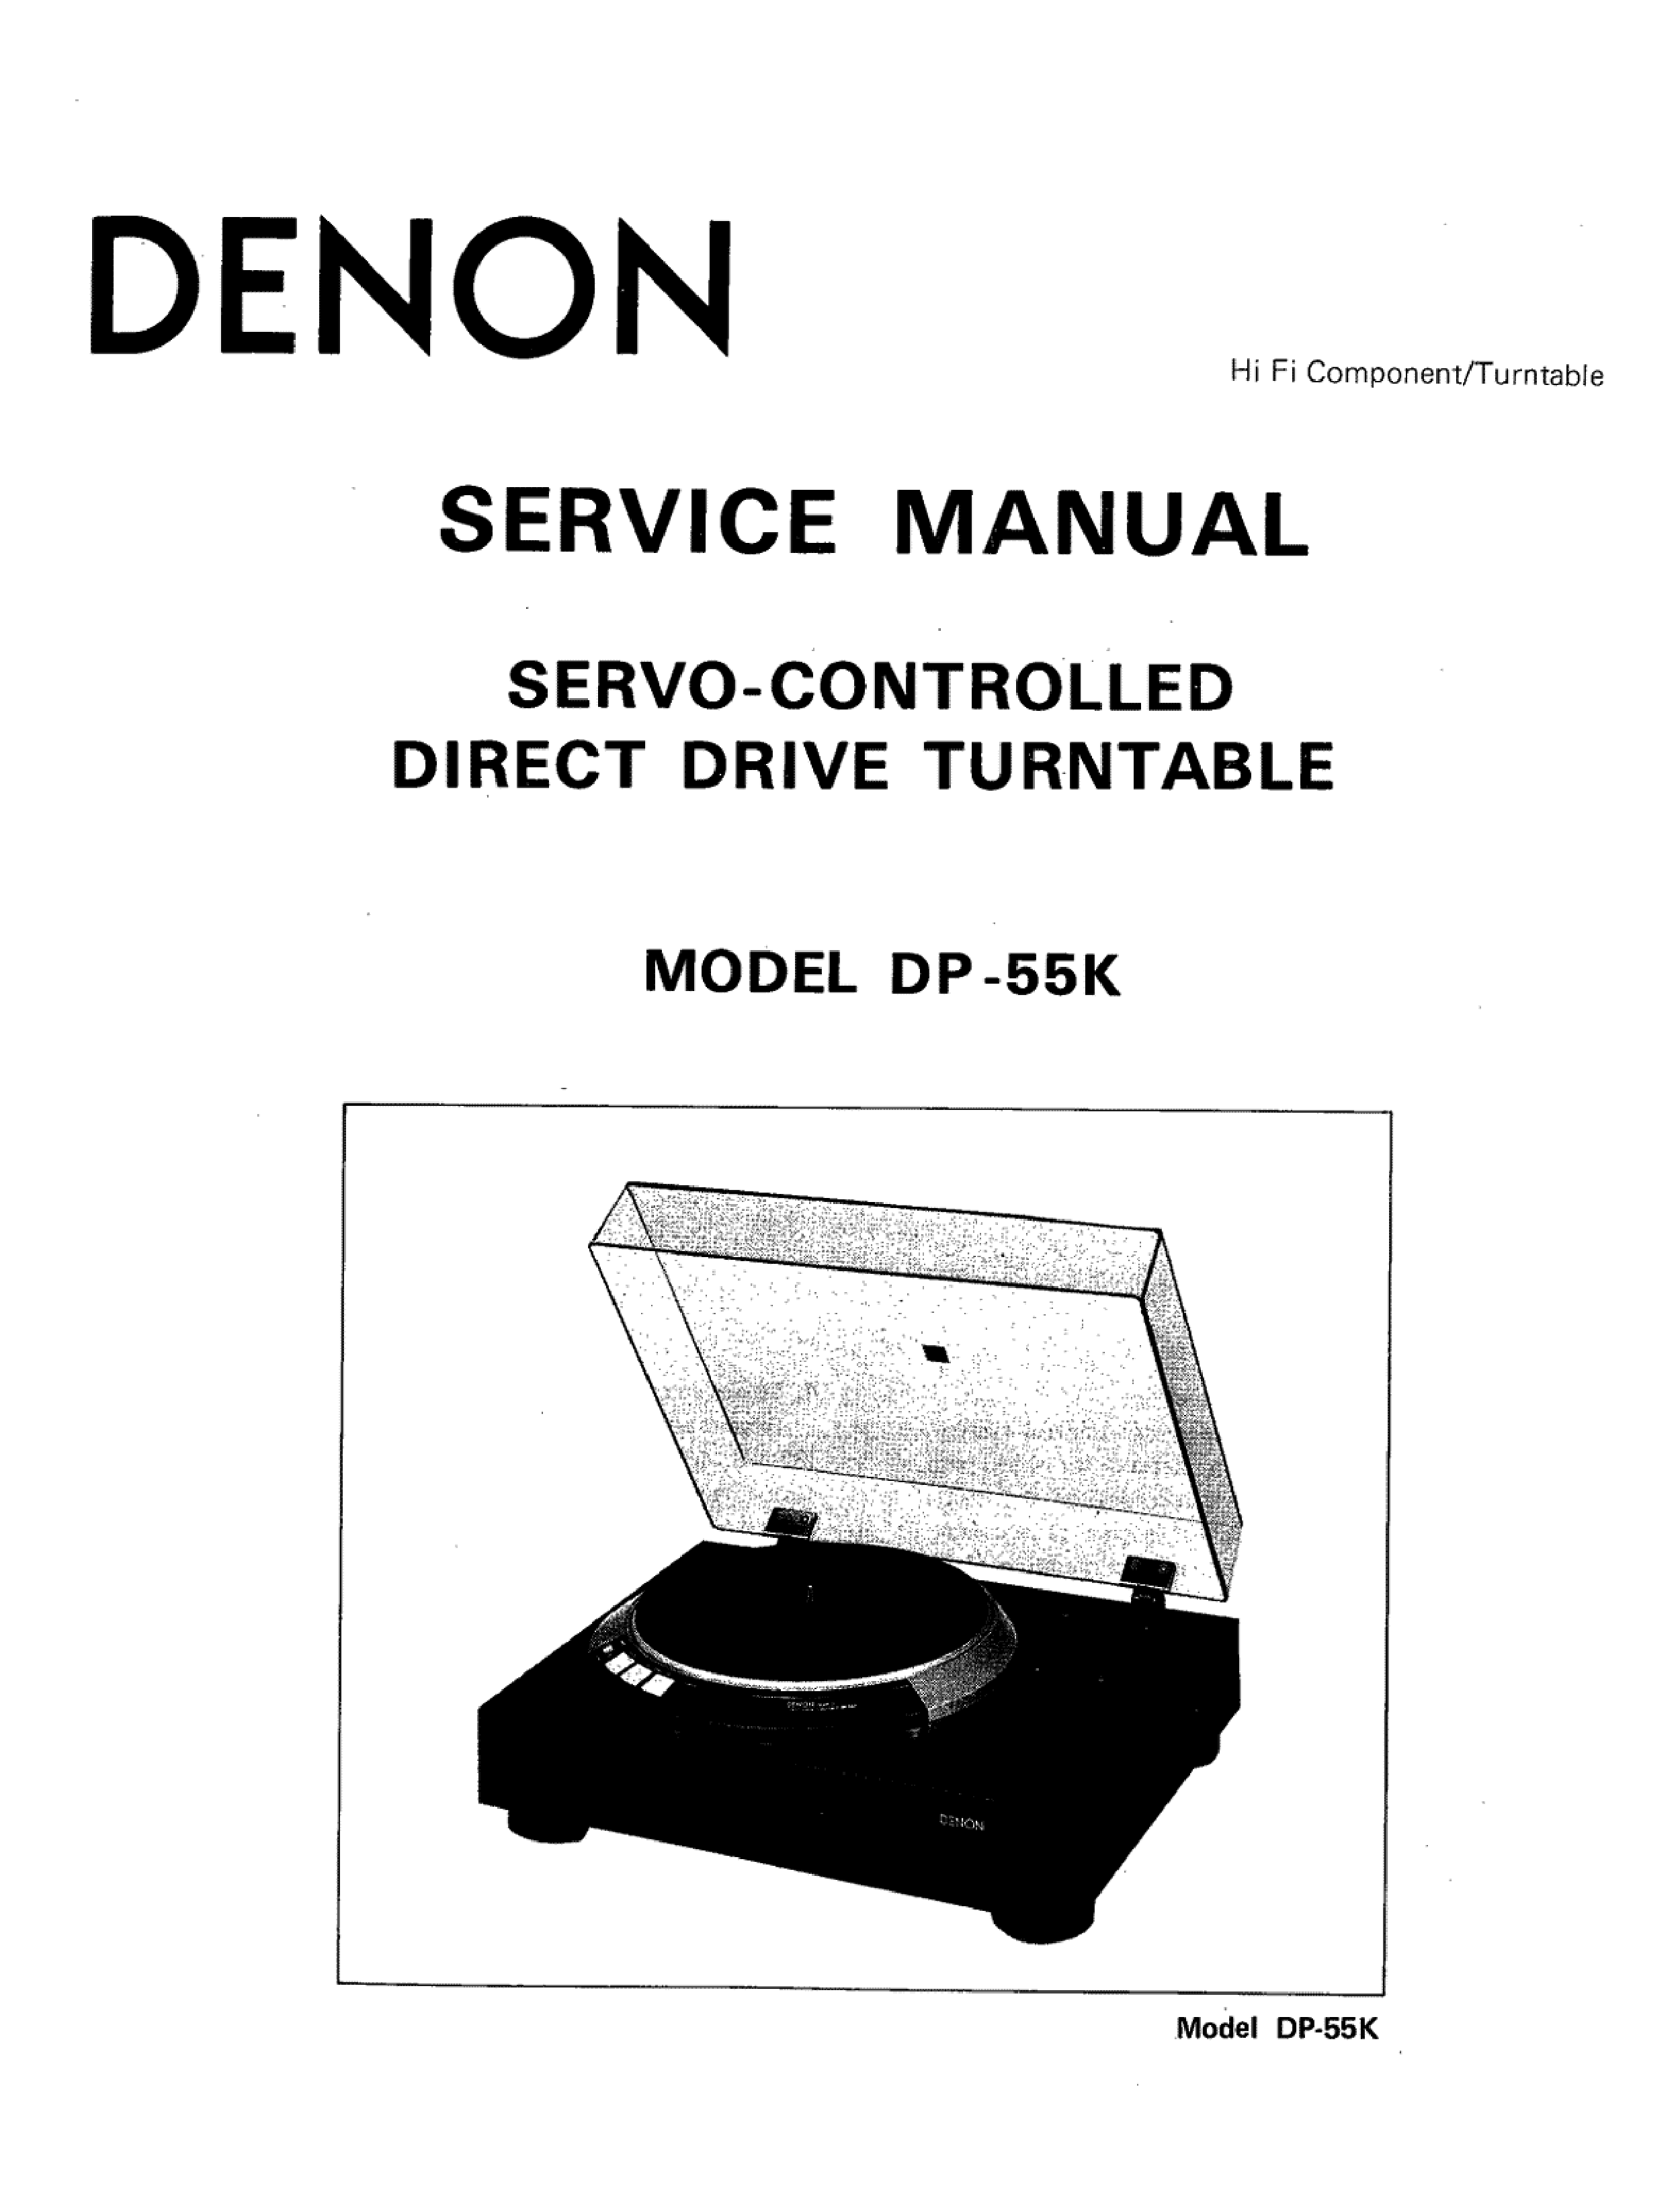 Denon DP-55K Service Bulletin